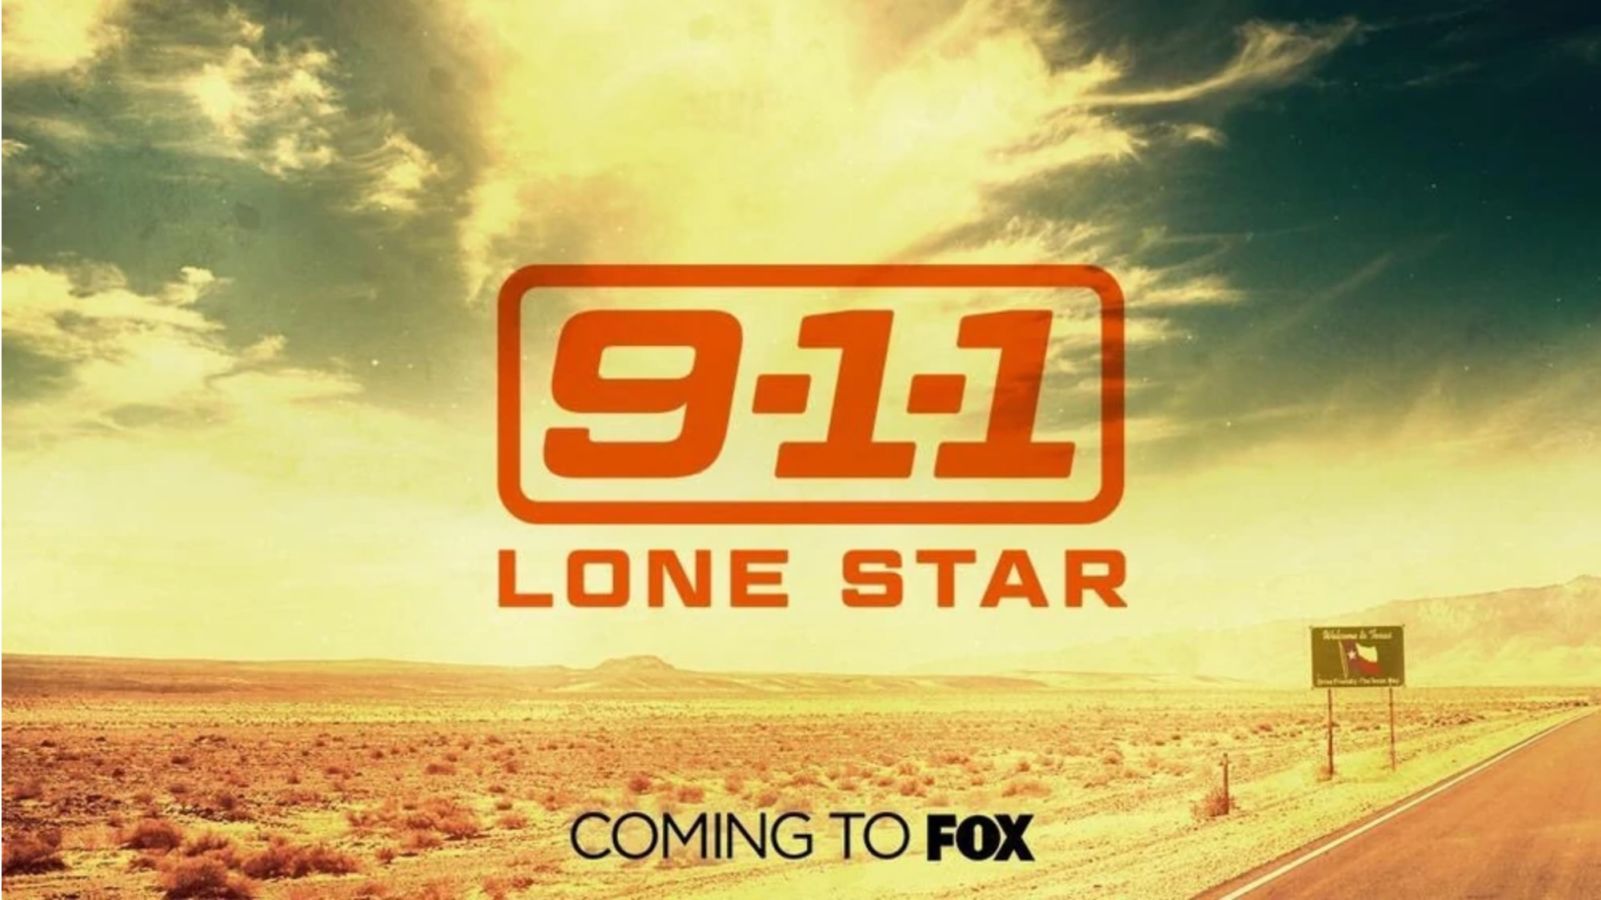 Season 1 star 911 lone Who Is